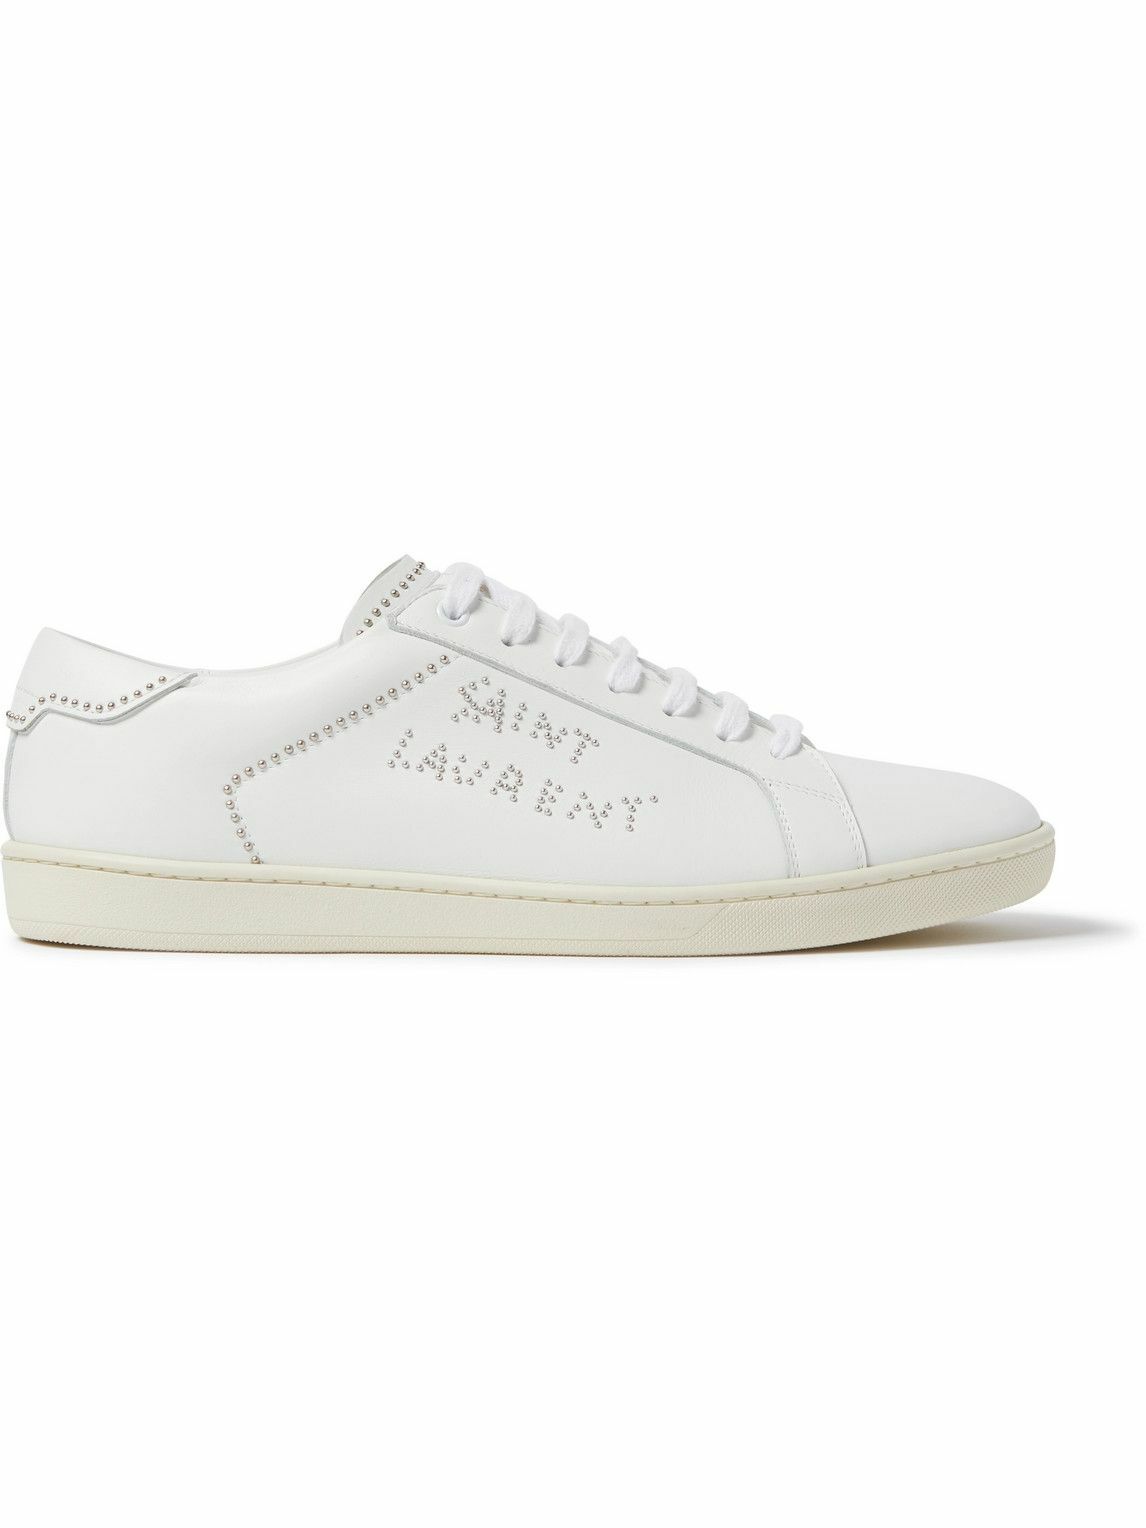 SAINT LAURENT - Studded Leather Sneakers - White Saint Laurent